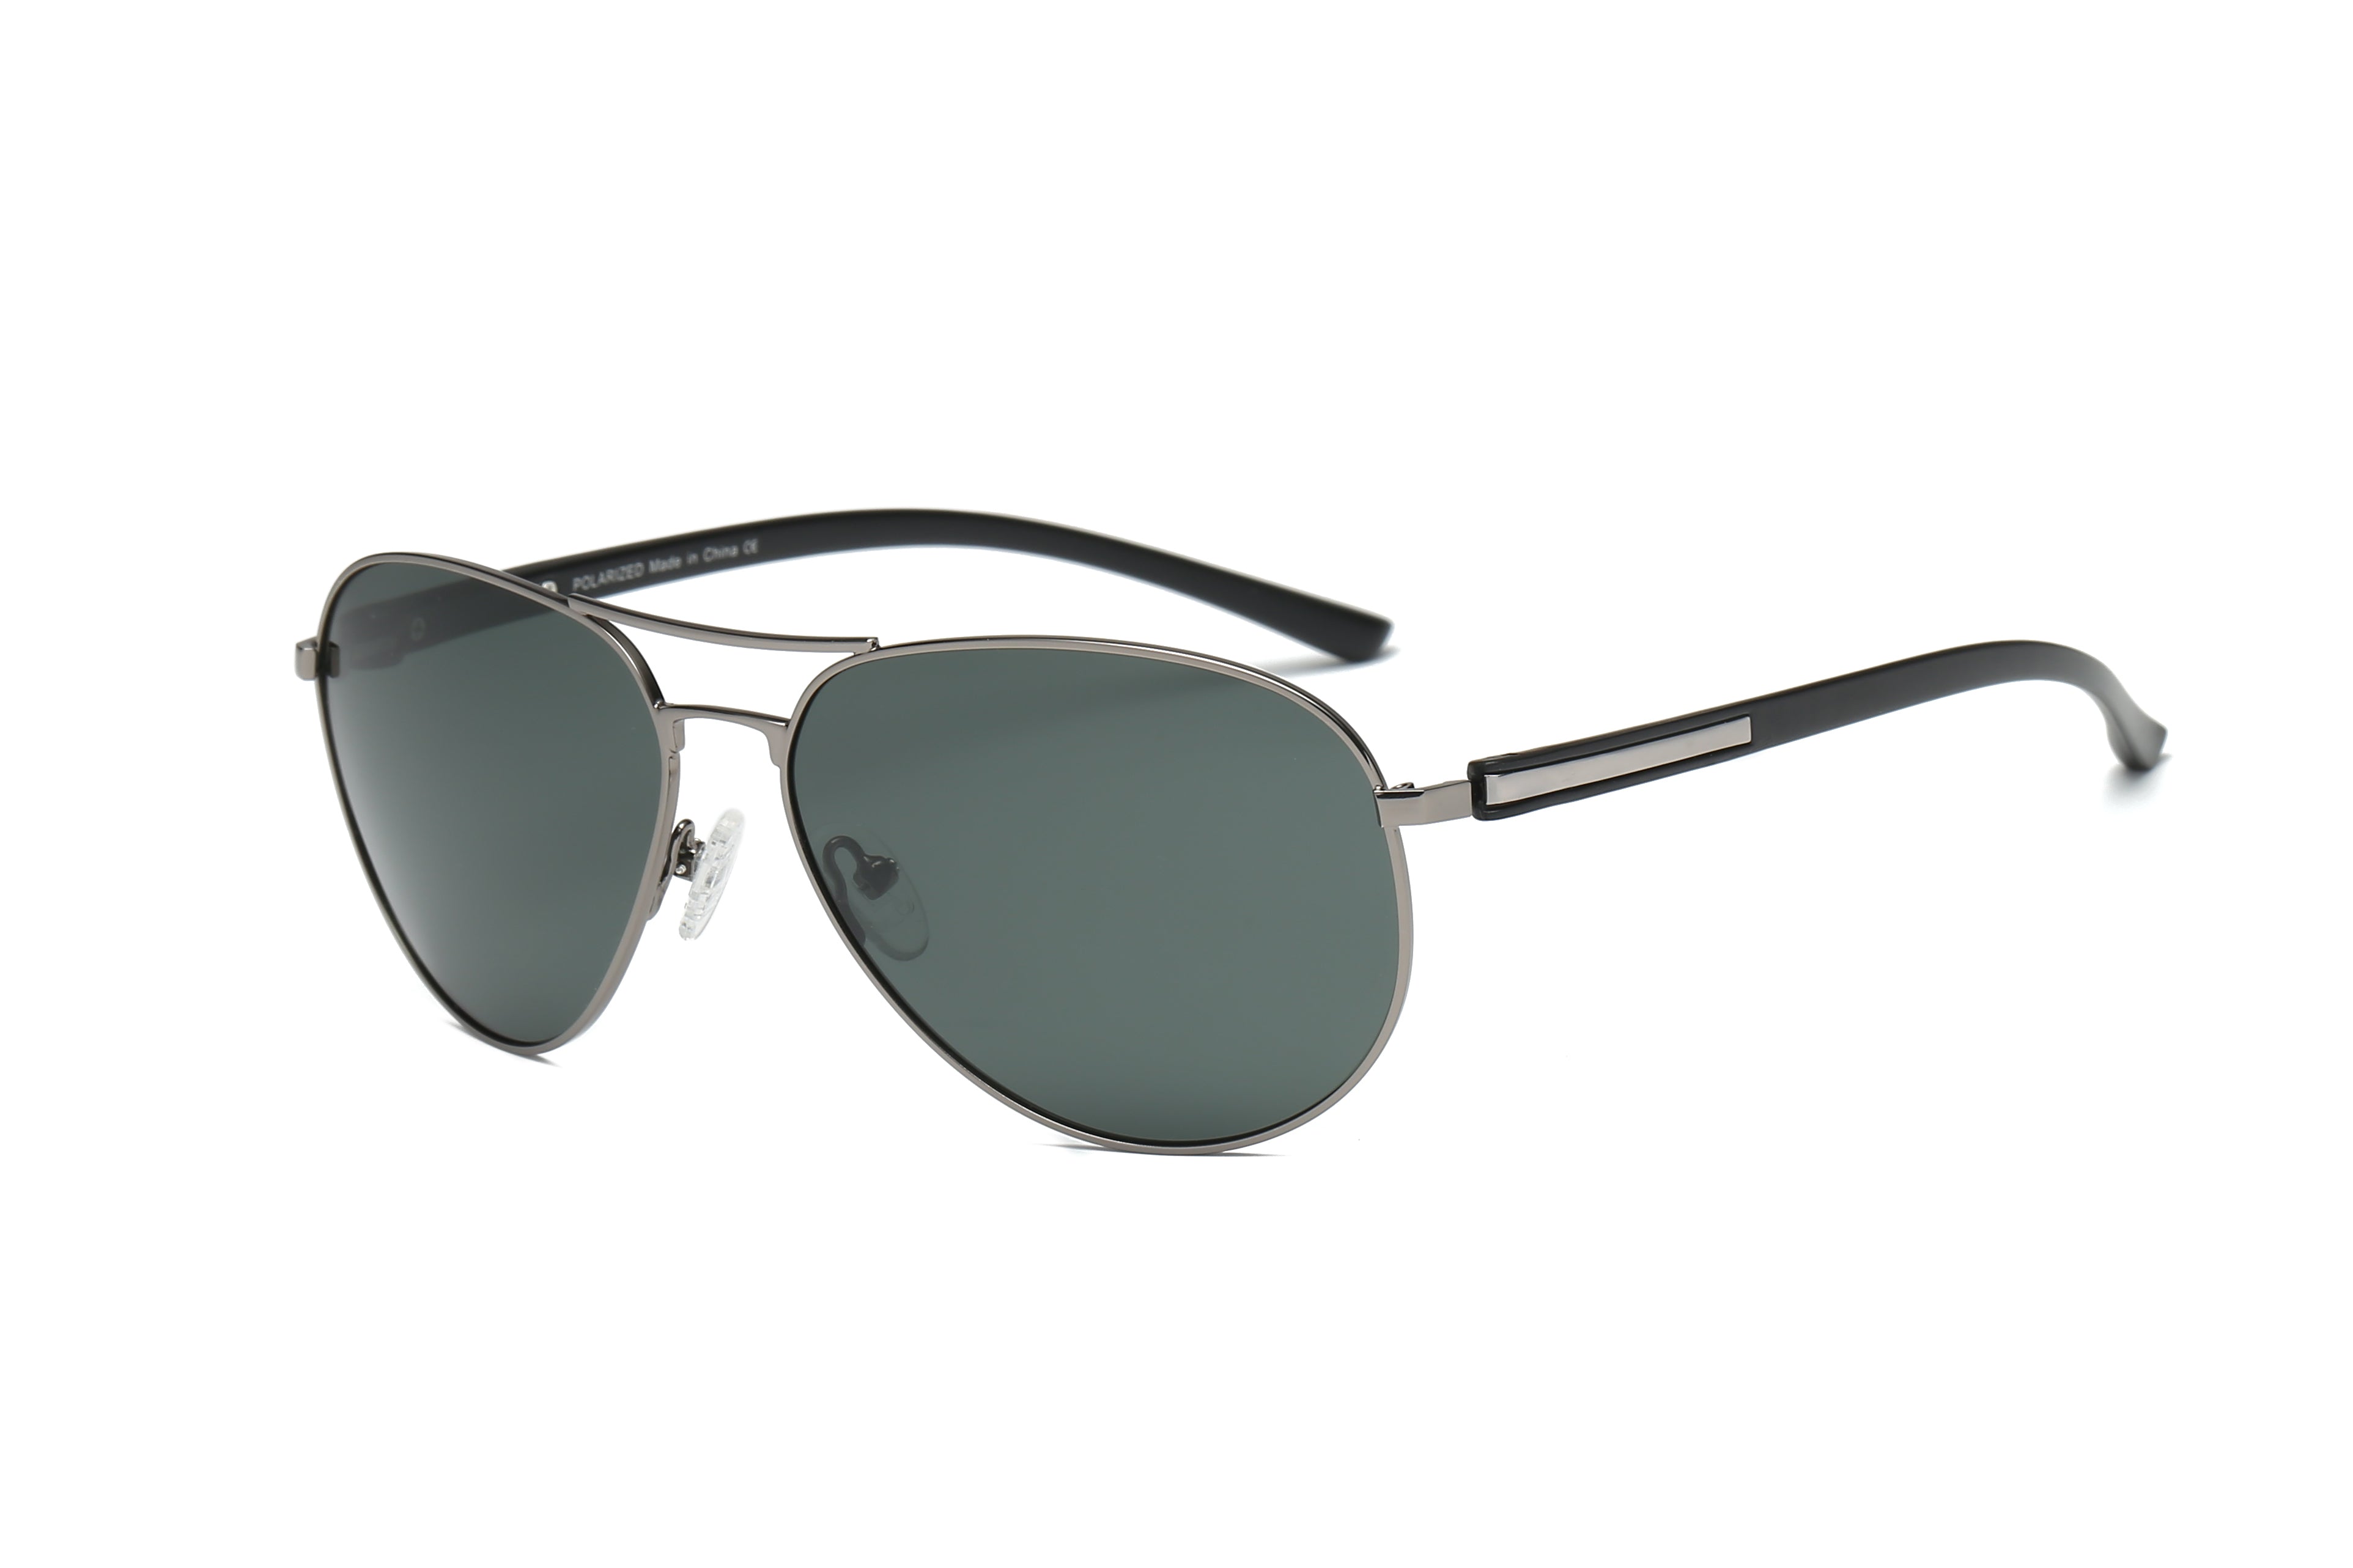 P4001 - Classic Polarized Aviator Sunglasses Silver/Olive